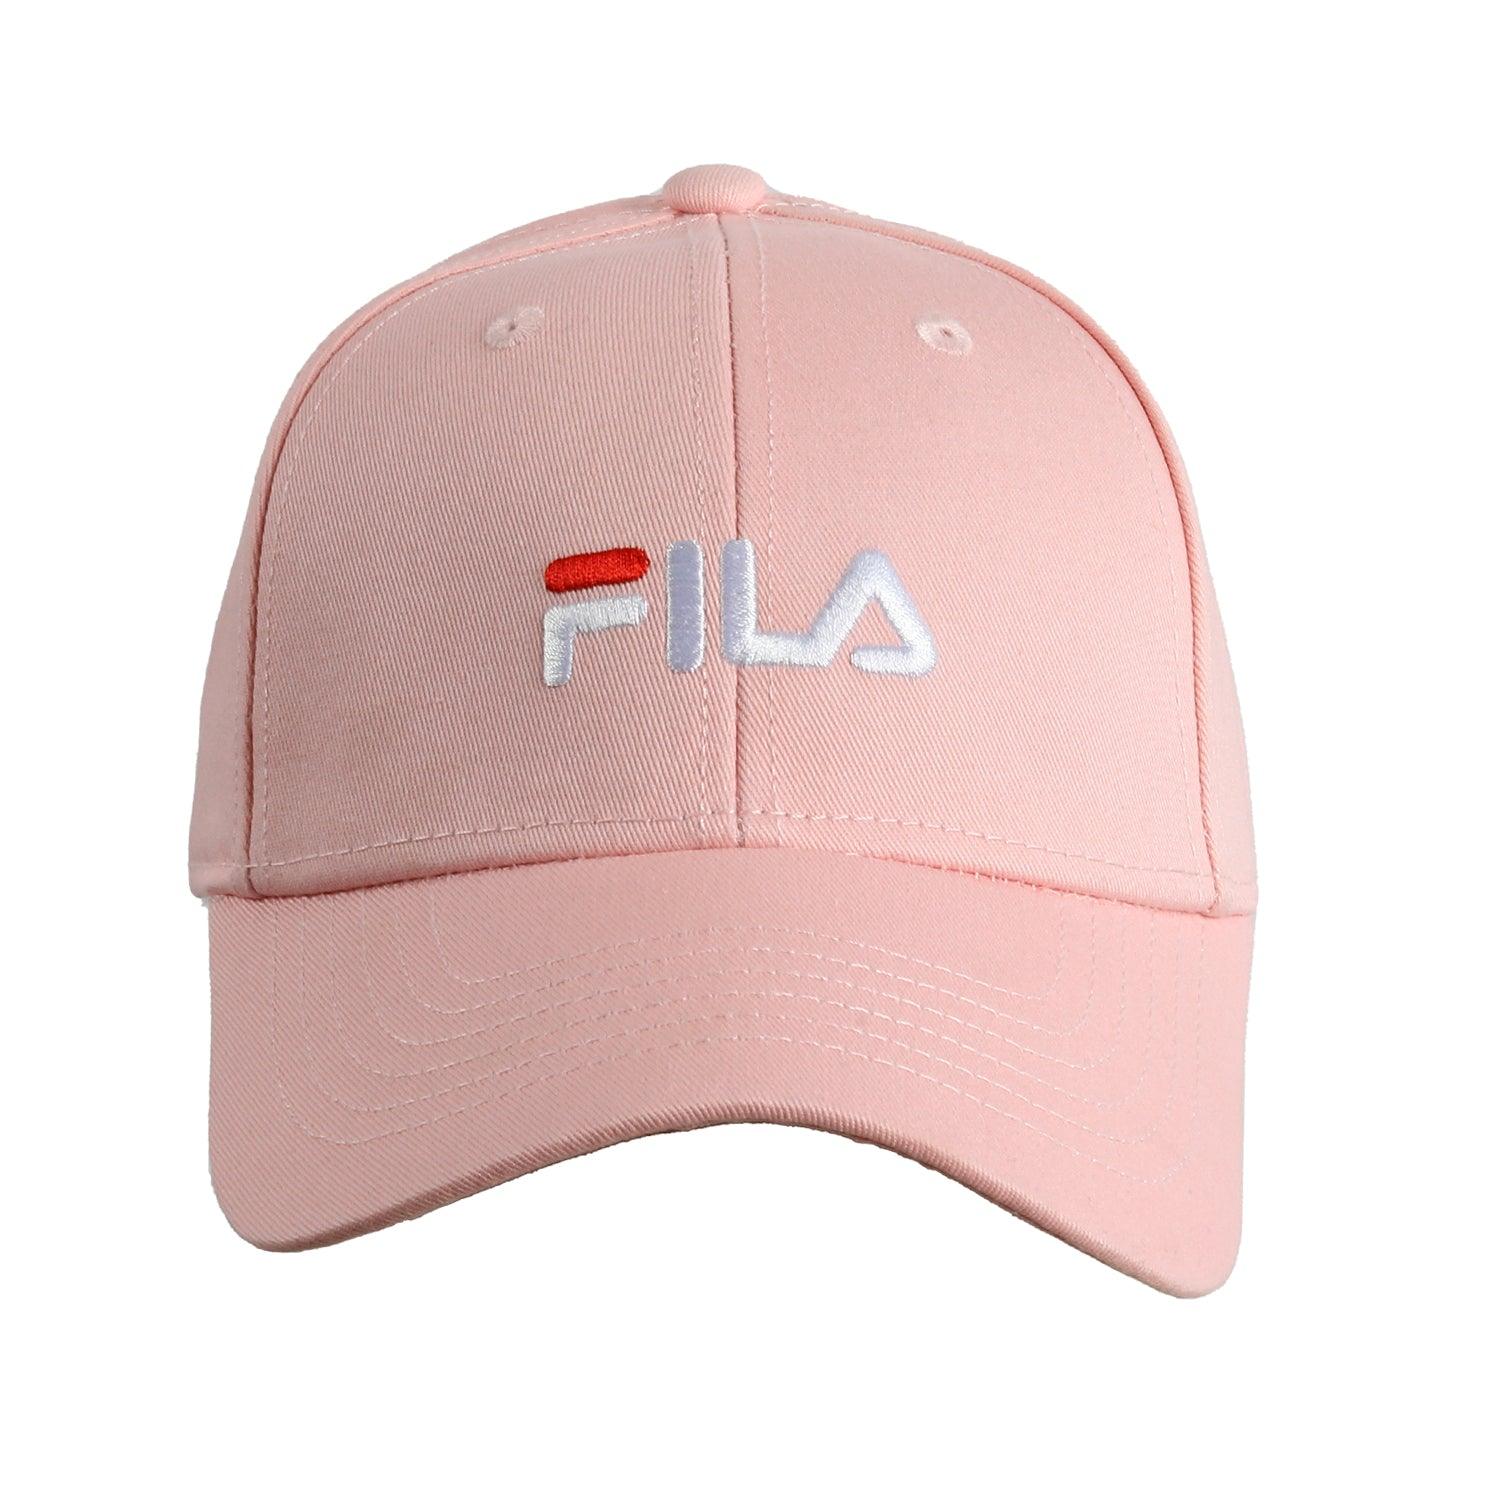 FILA ADULT BUCKLE CAP - PINK CAP22-C68 Activ Abou Alaa